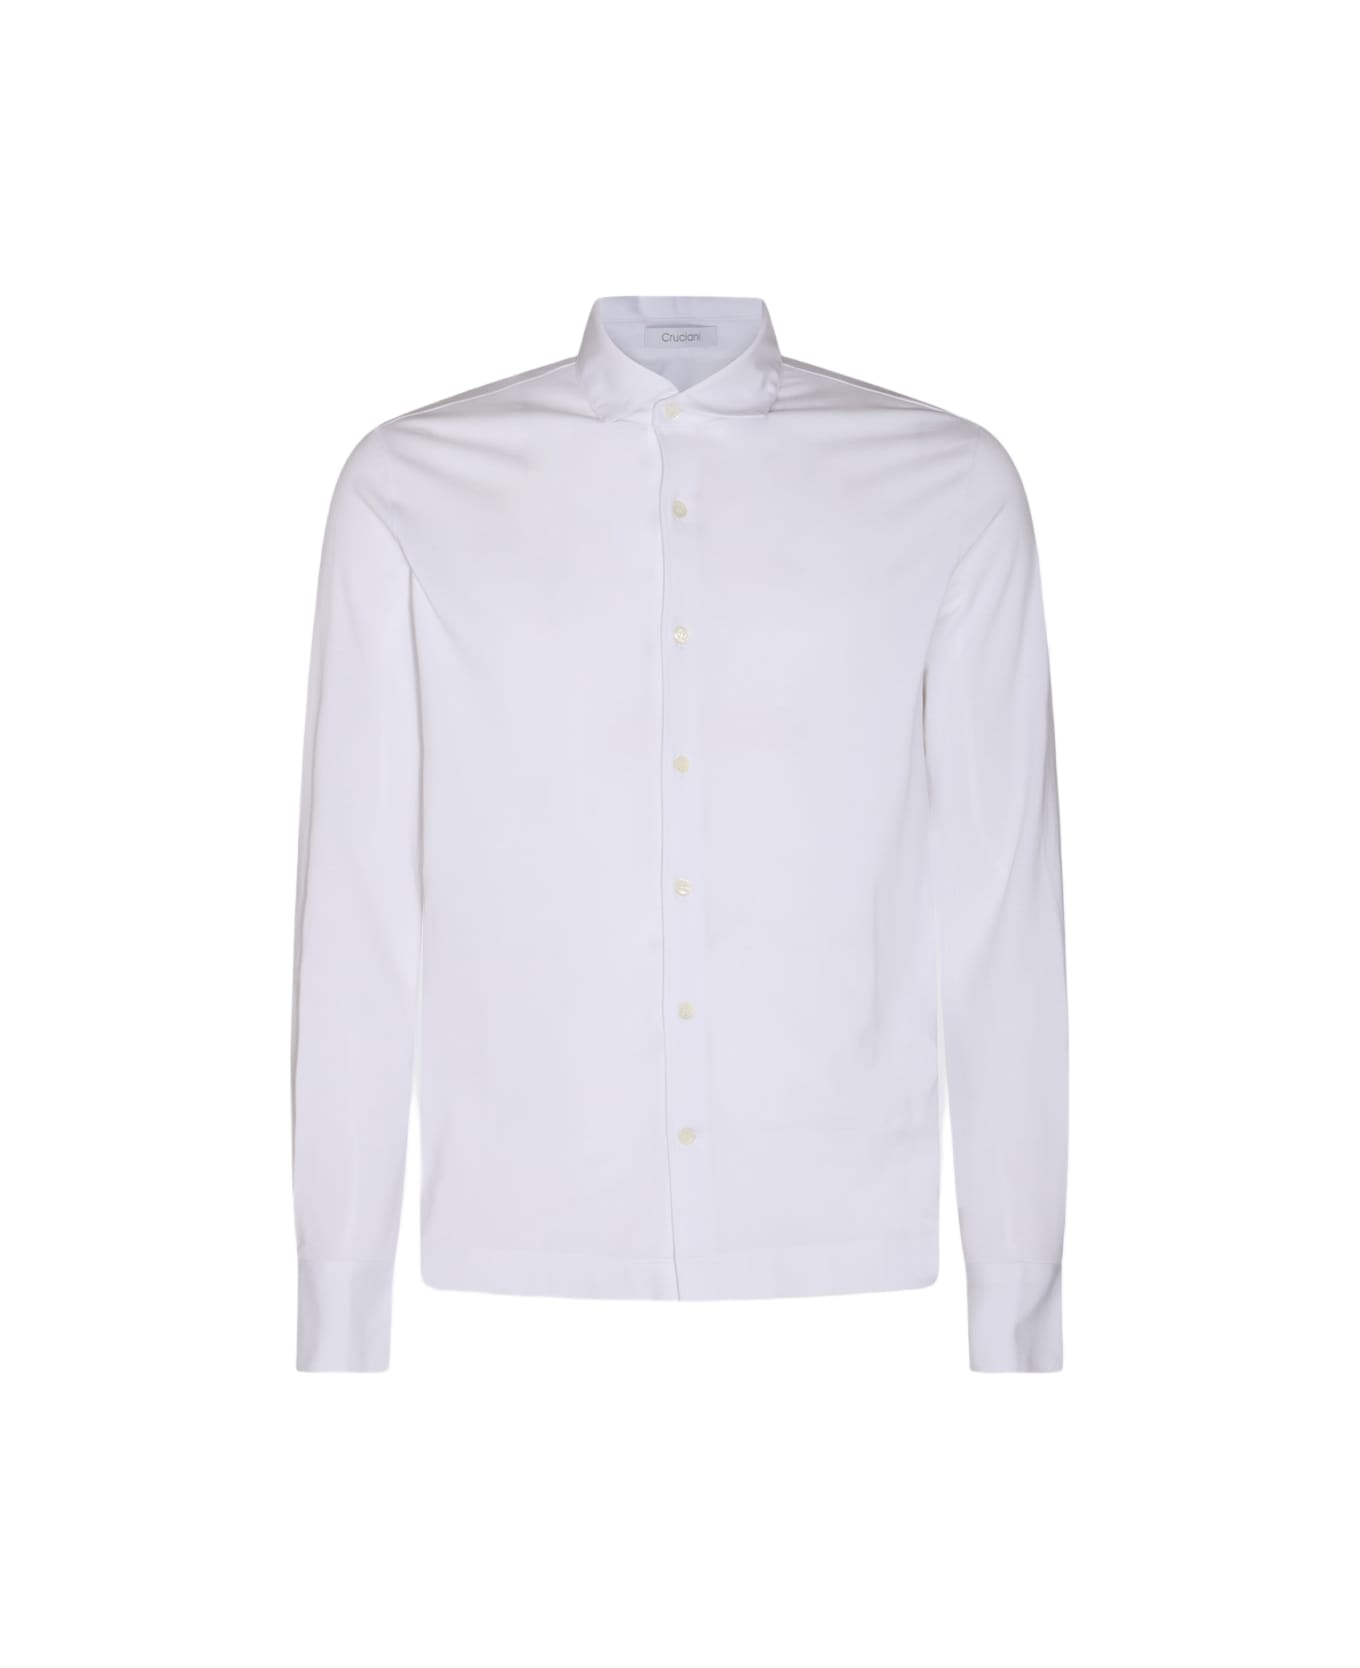 Cruciani White Cotton Shirt - White シャツ